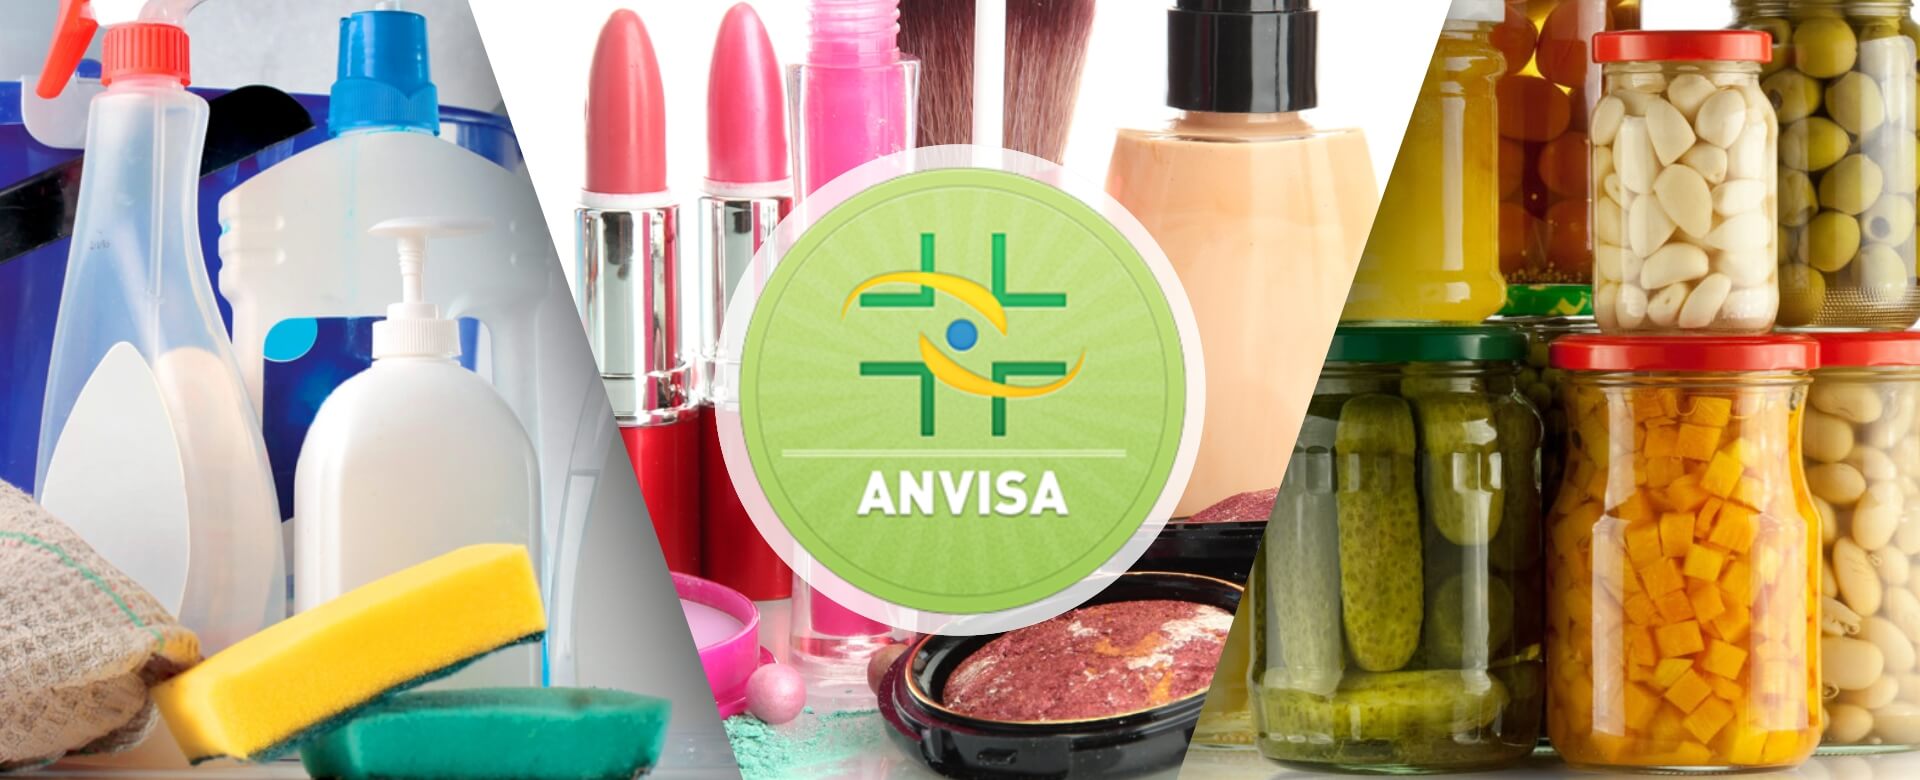 Transportadora certificada pela Anvisa para transportar cosméticos, saneantes e conservas.